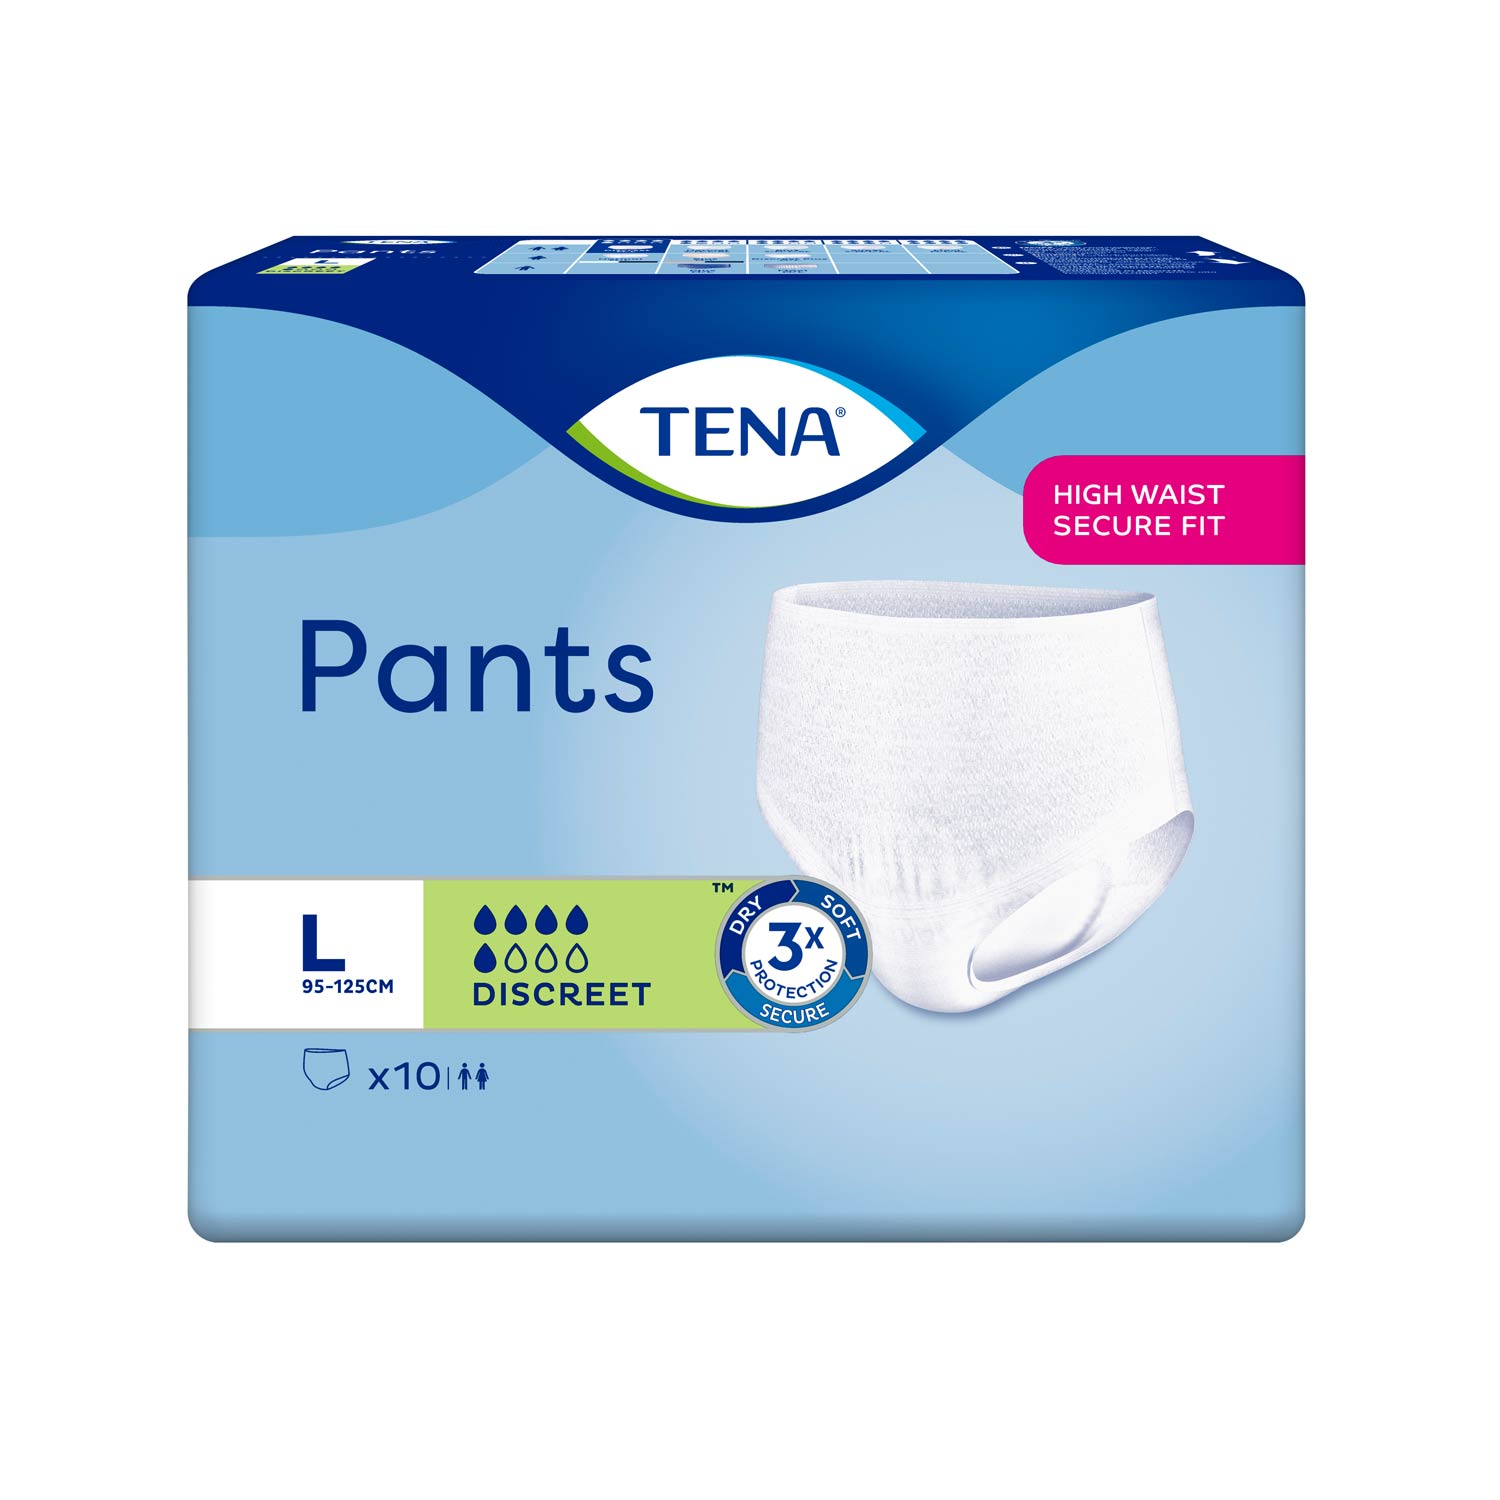 TENA Pants Discreet, Pants, Medium, Beutel (1 x 12 Stk.)